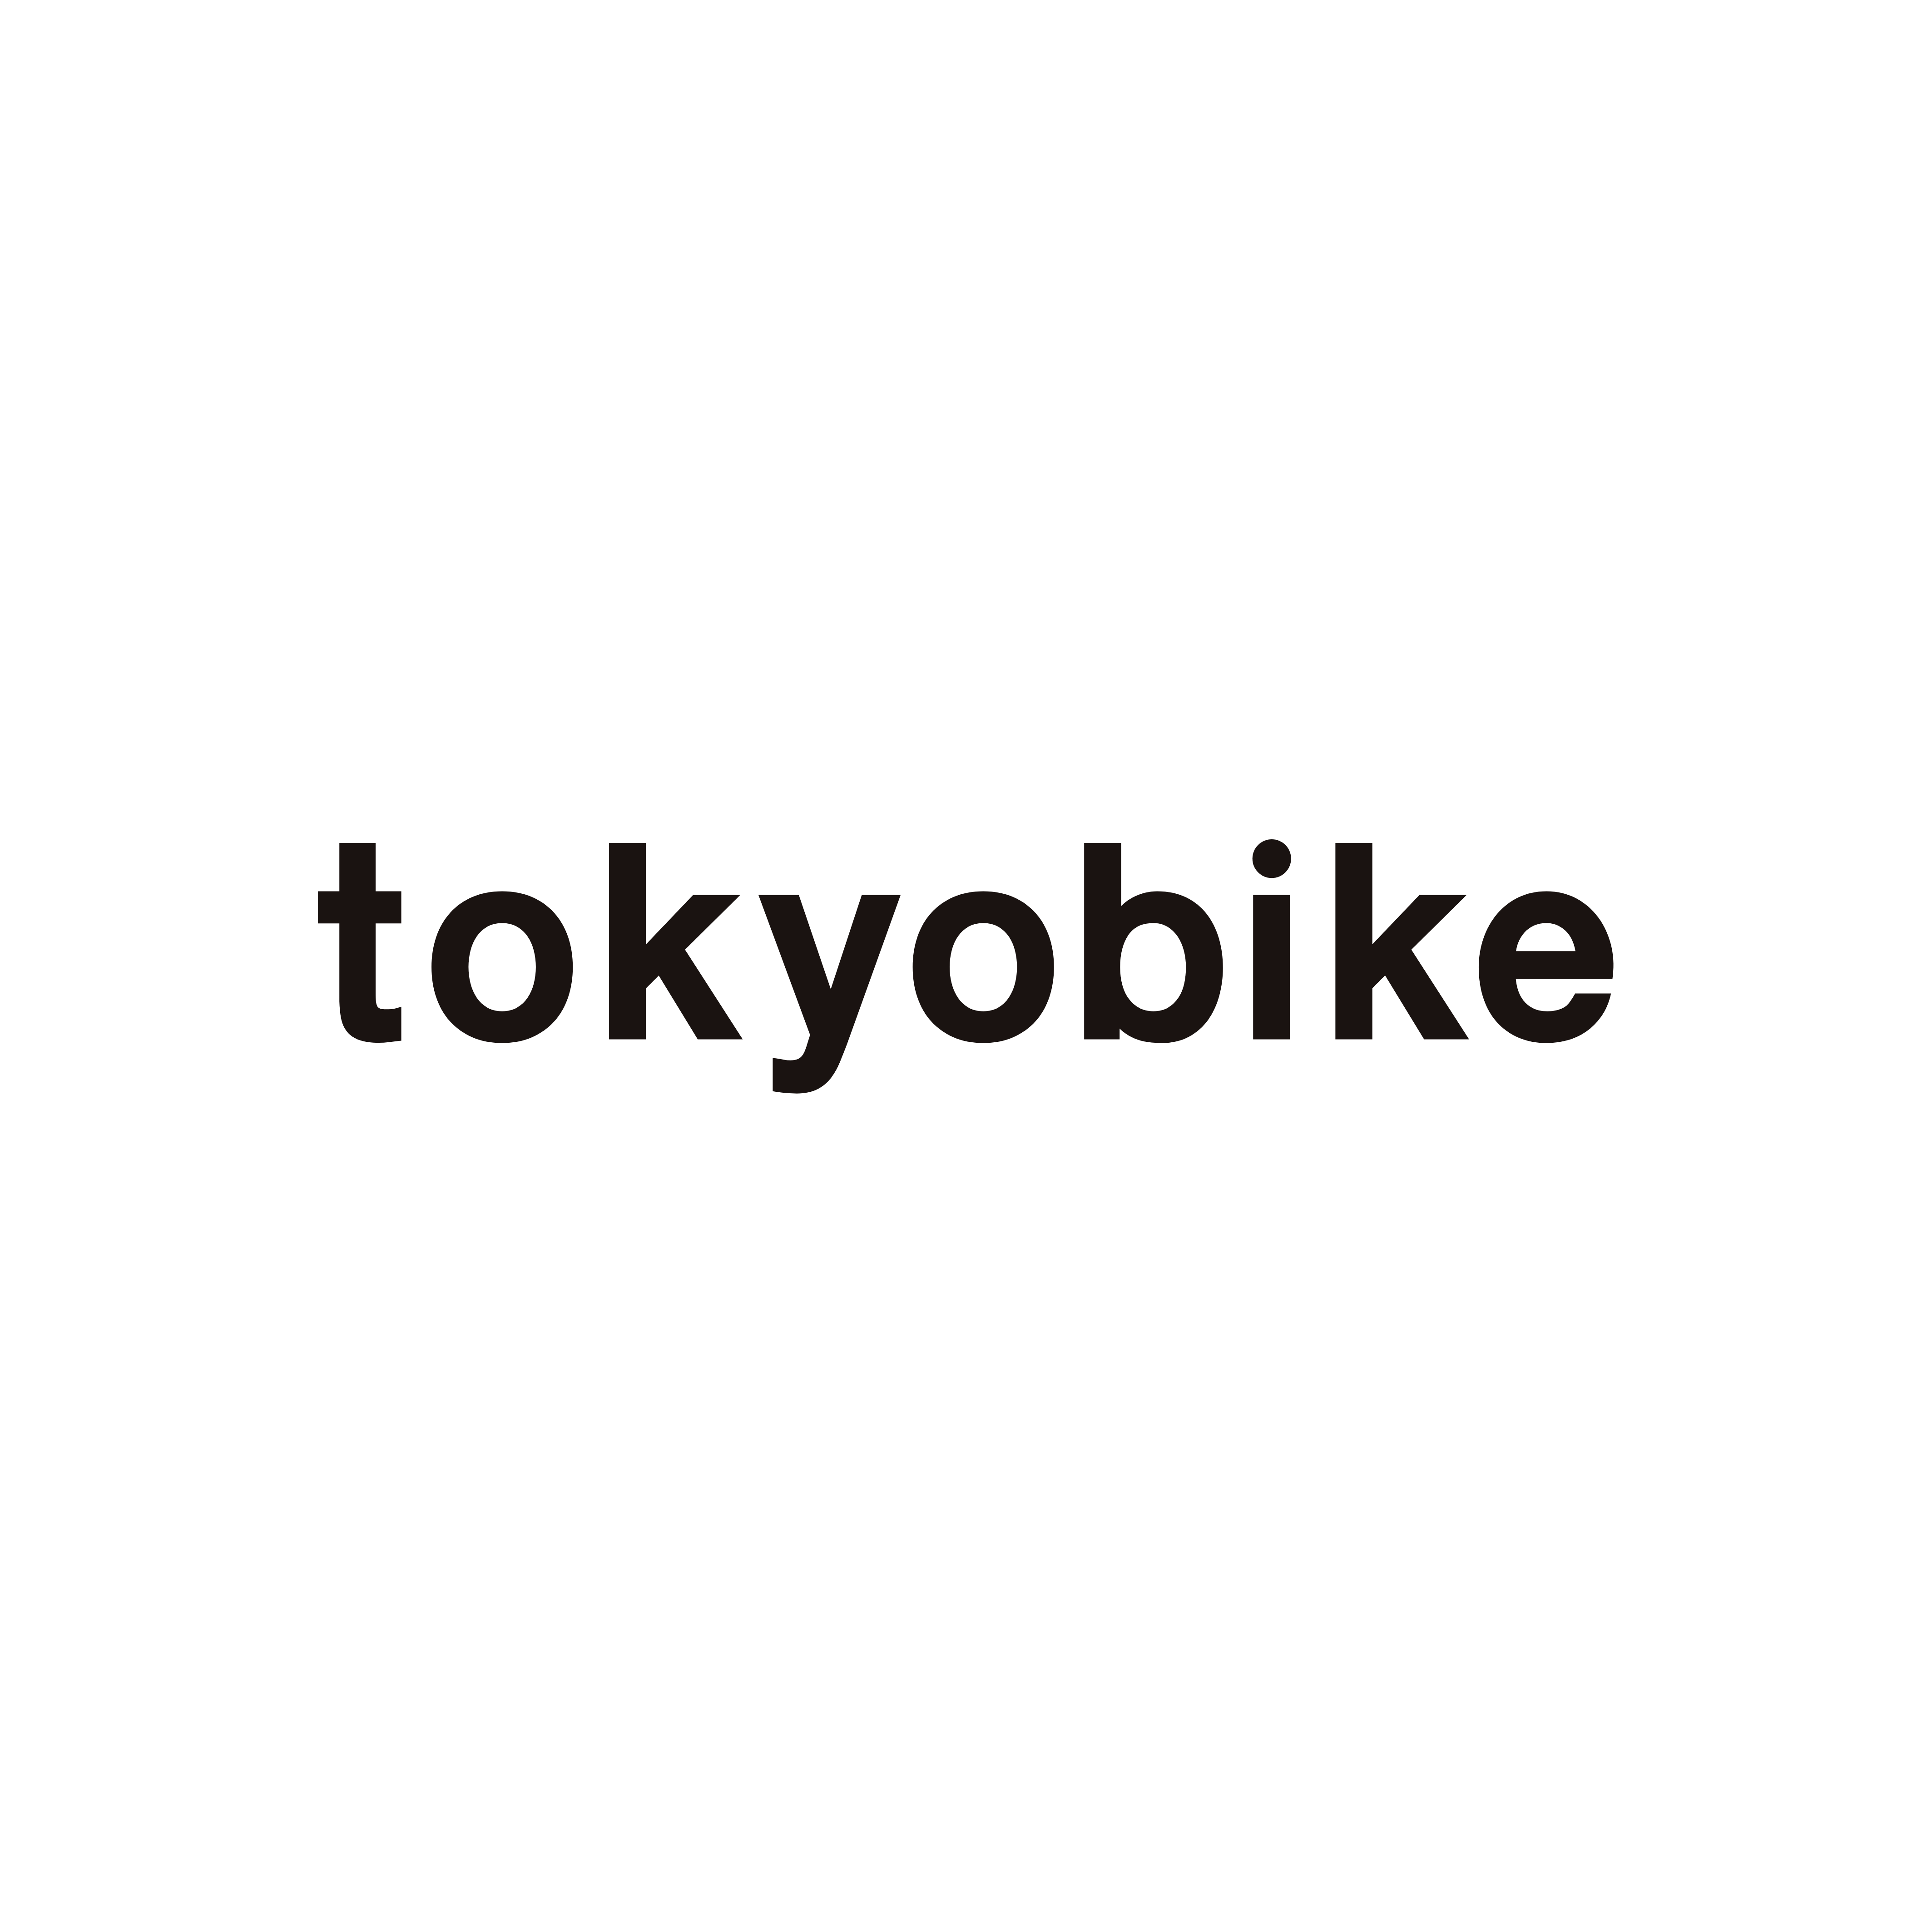 tokyobike 